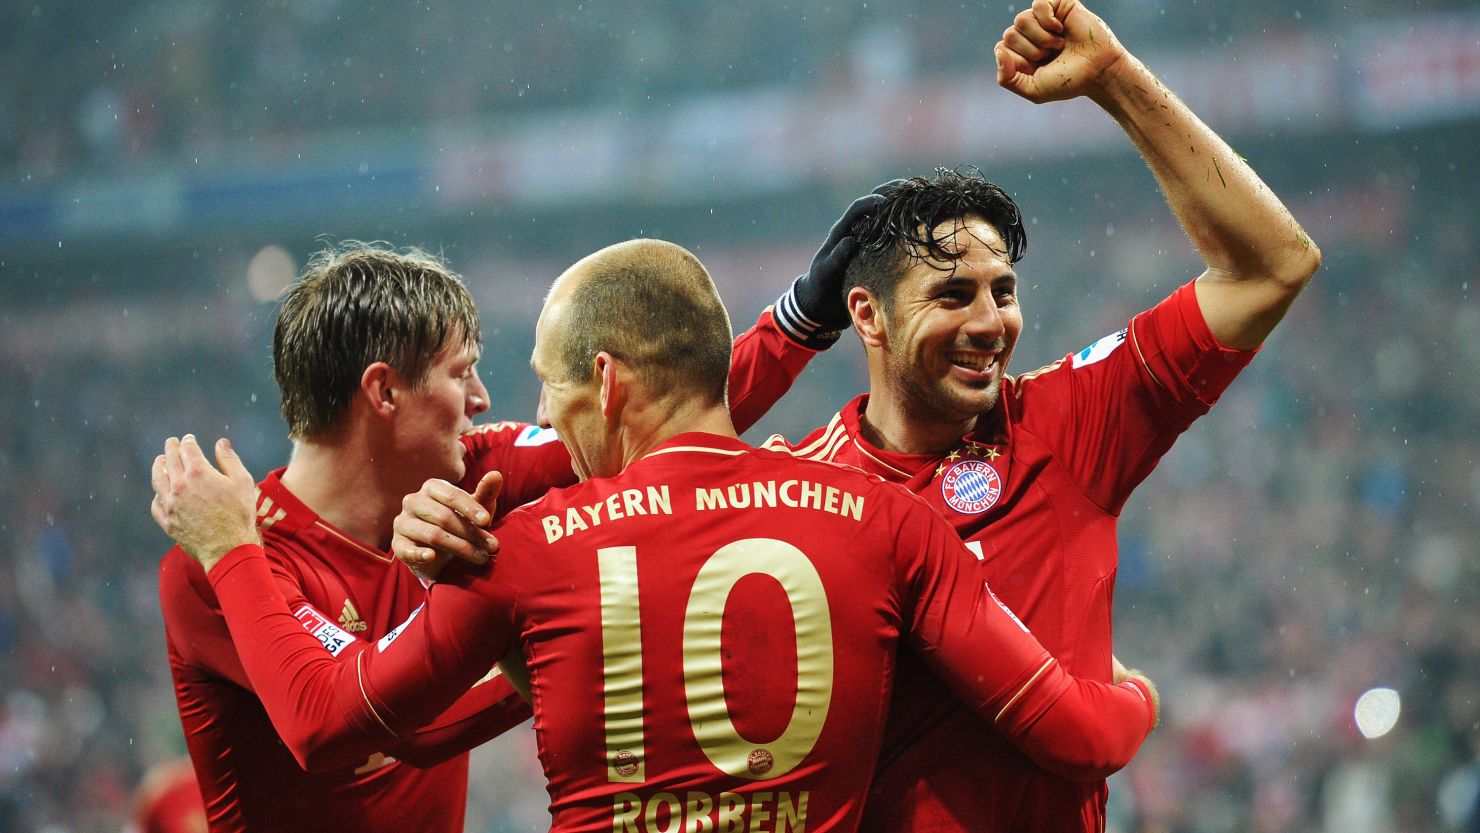 Claudio Pizarro (right) scored for goals in Bayern Munich's 9-2 mauling of Hamburg on Saturday.